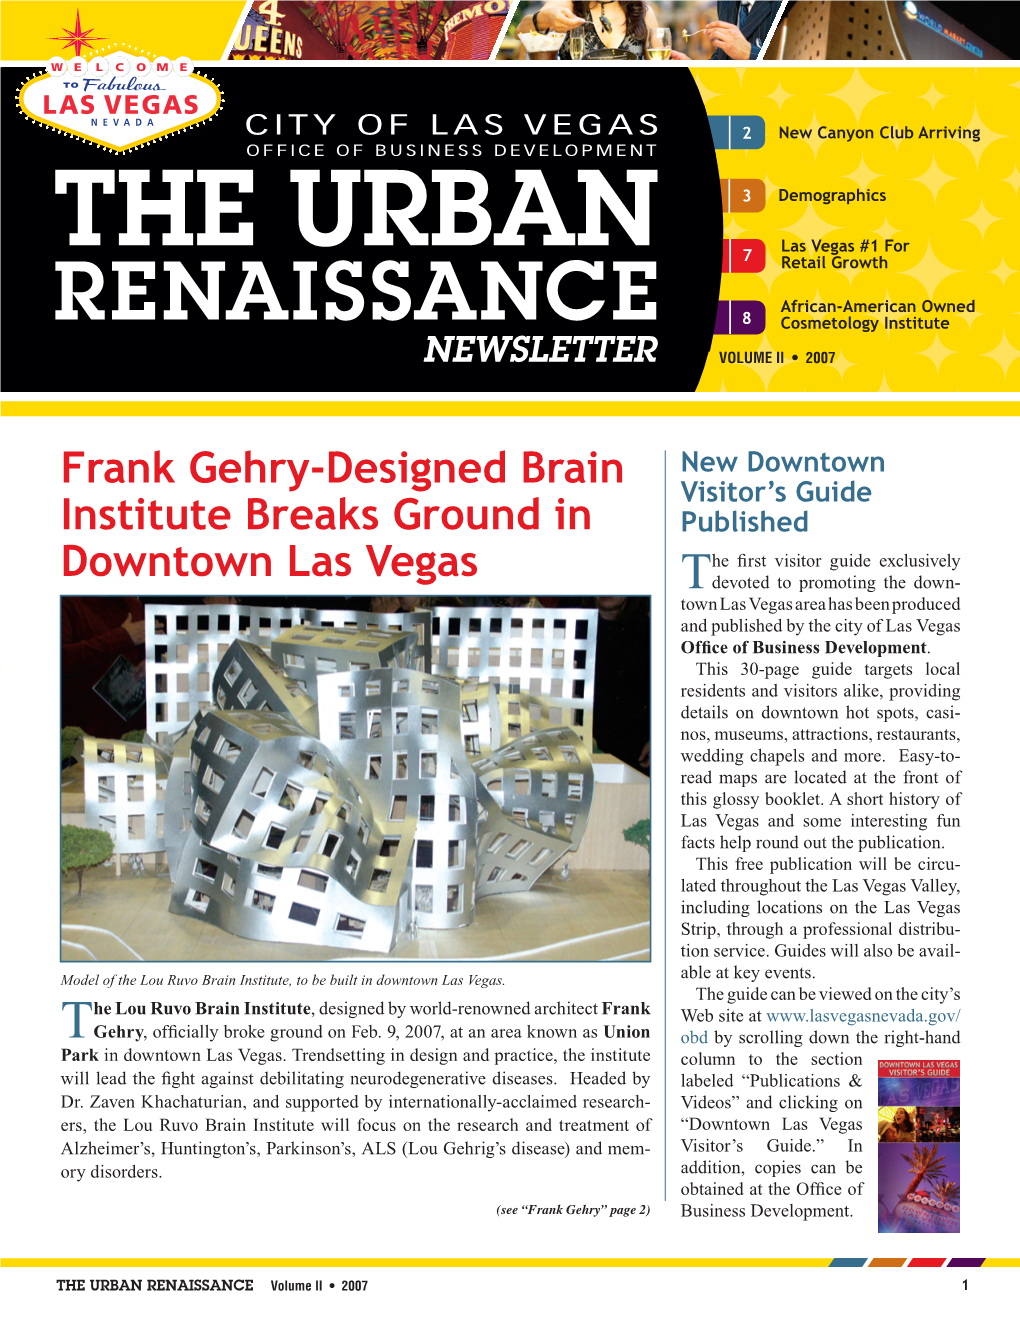 Frank Gehry-Designed Brain Institute Breaks Ground in Downtown Las